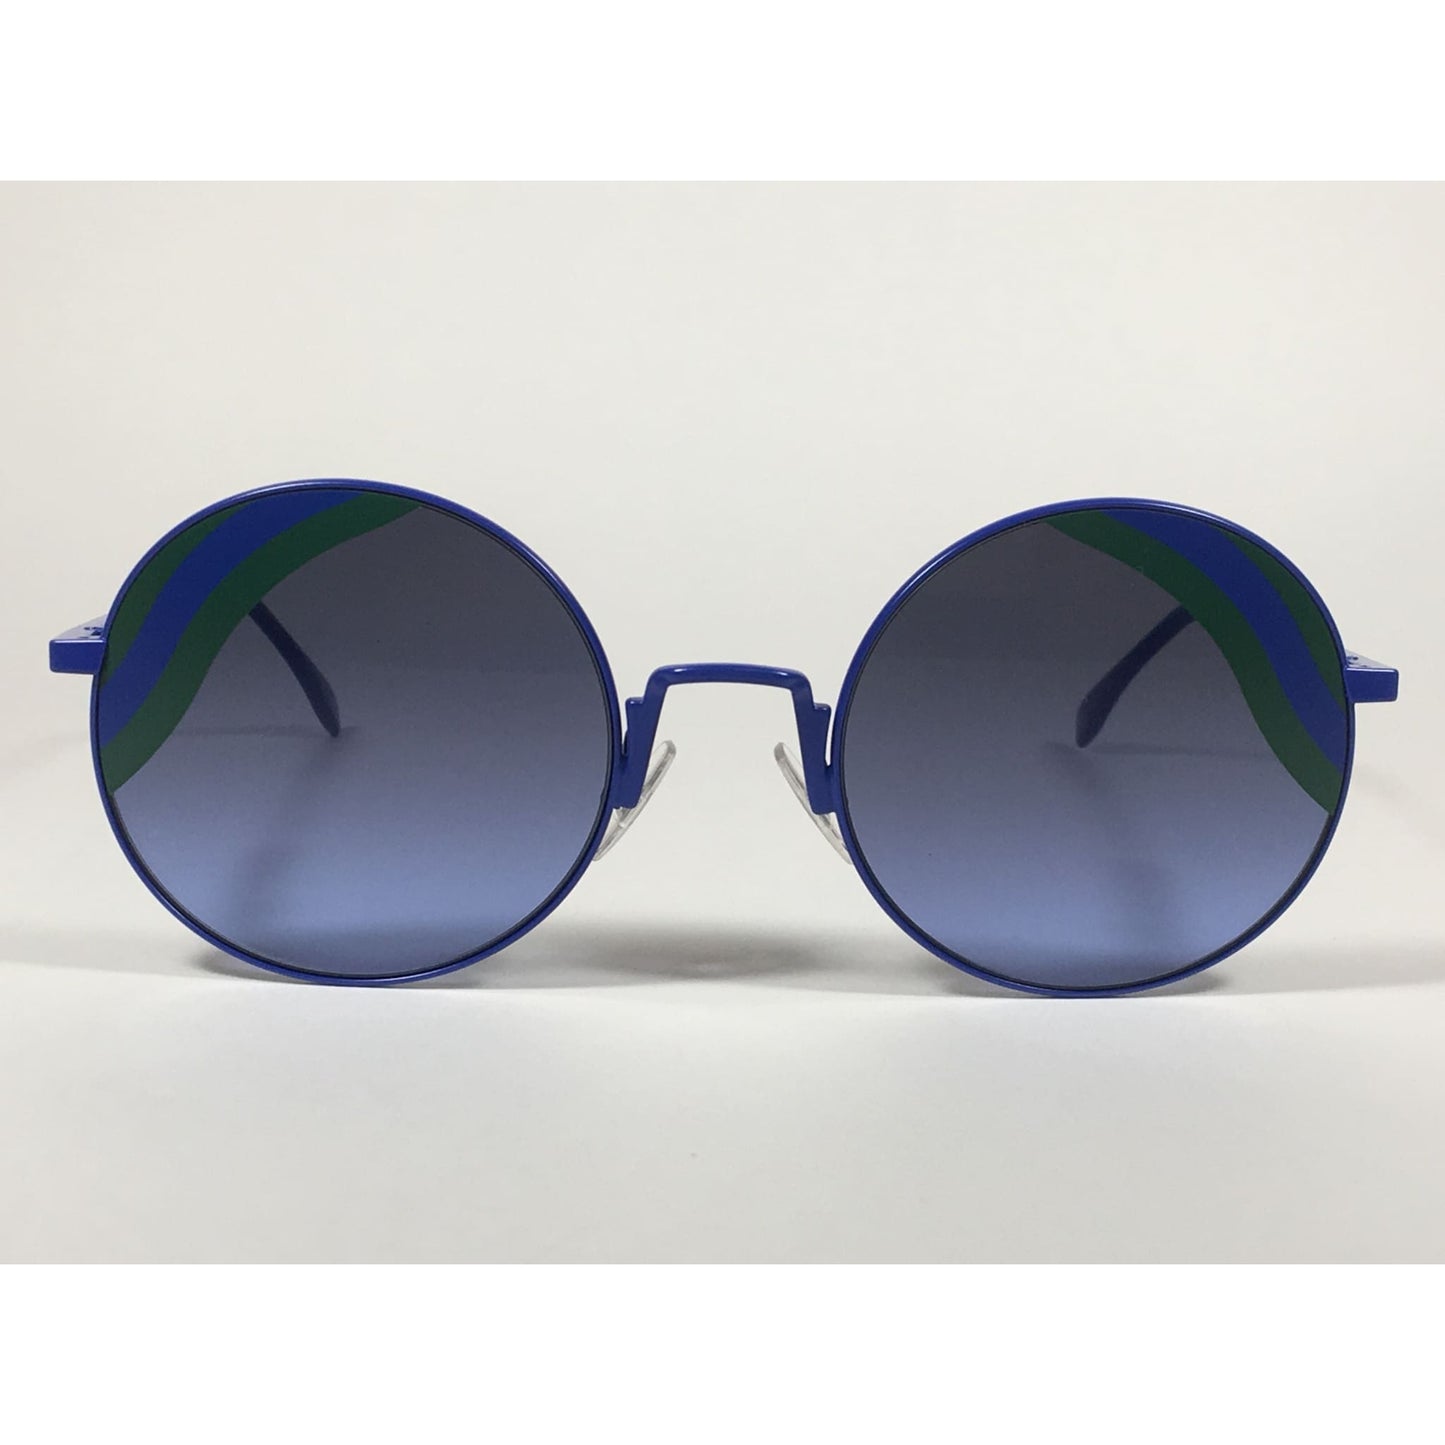 Fendi Round Sunglasses Blue Green Metal Frame Gray Smoke Lens FF0248/S PJP BLUE - Sunglasses